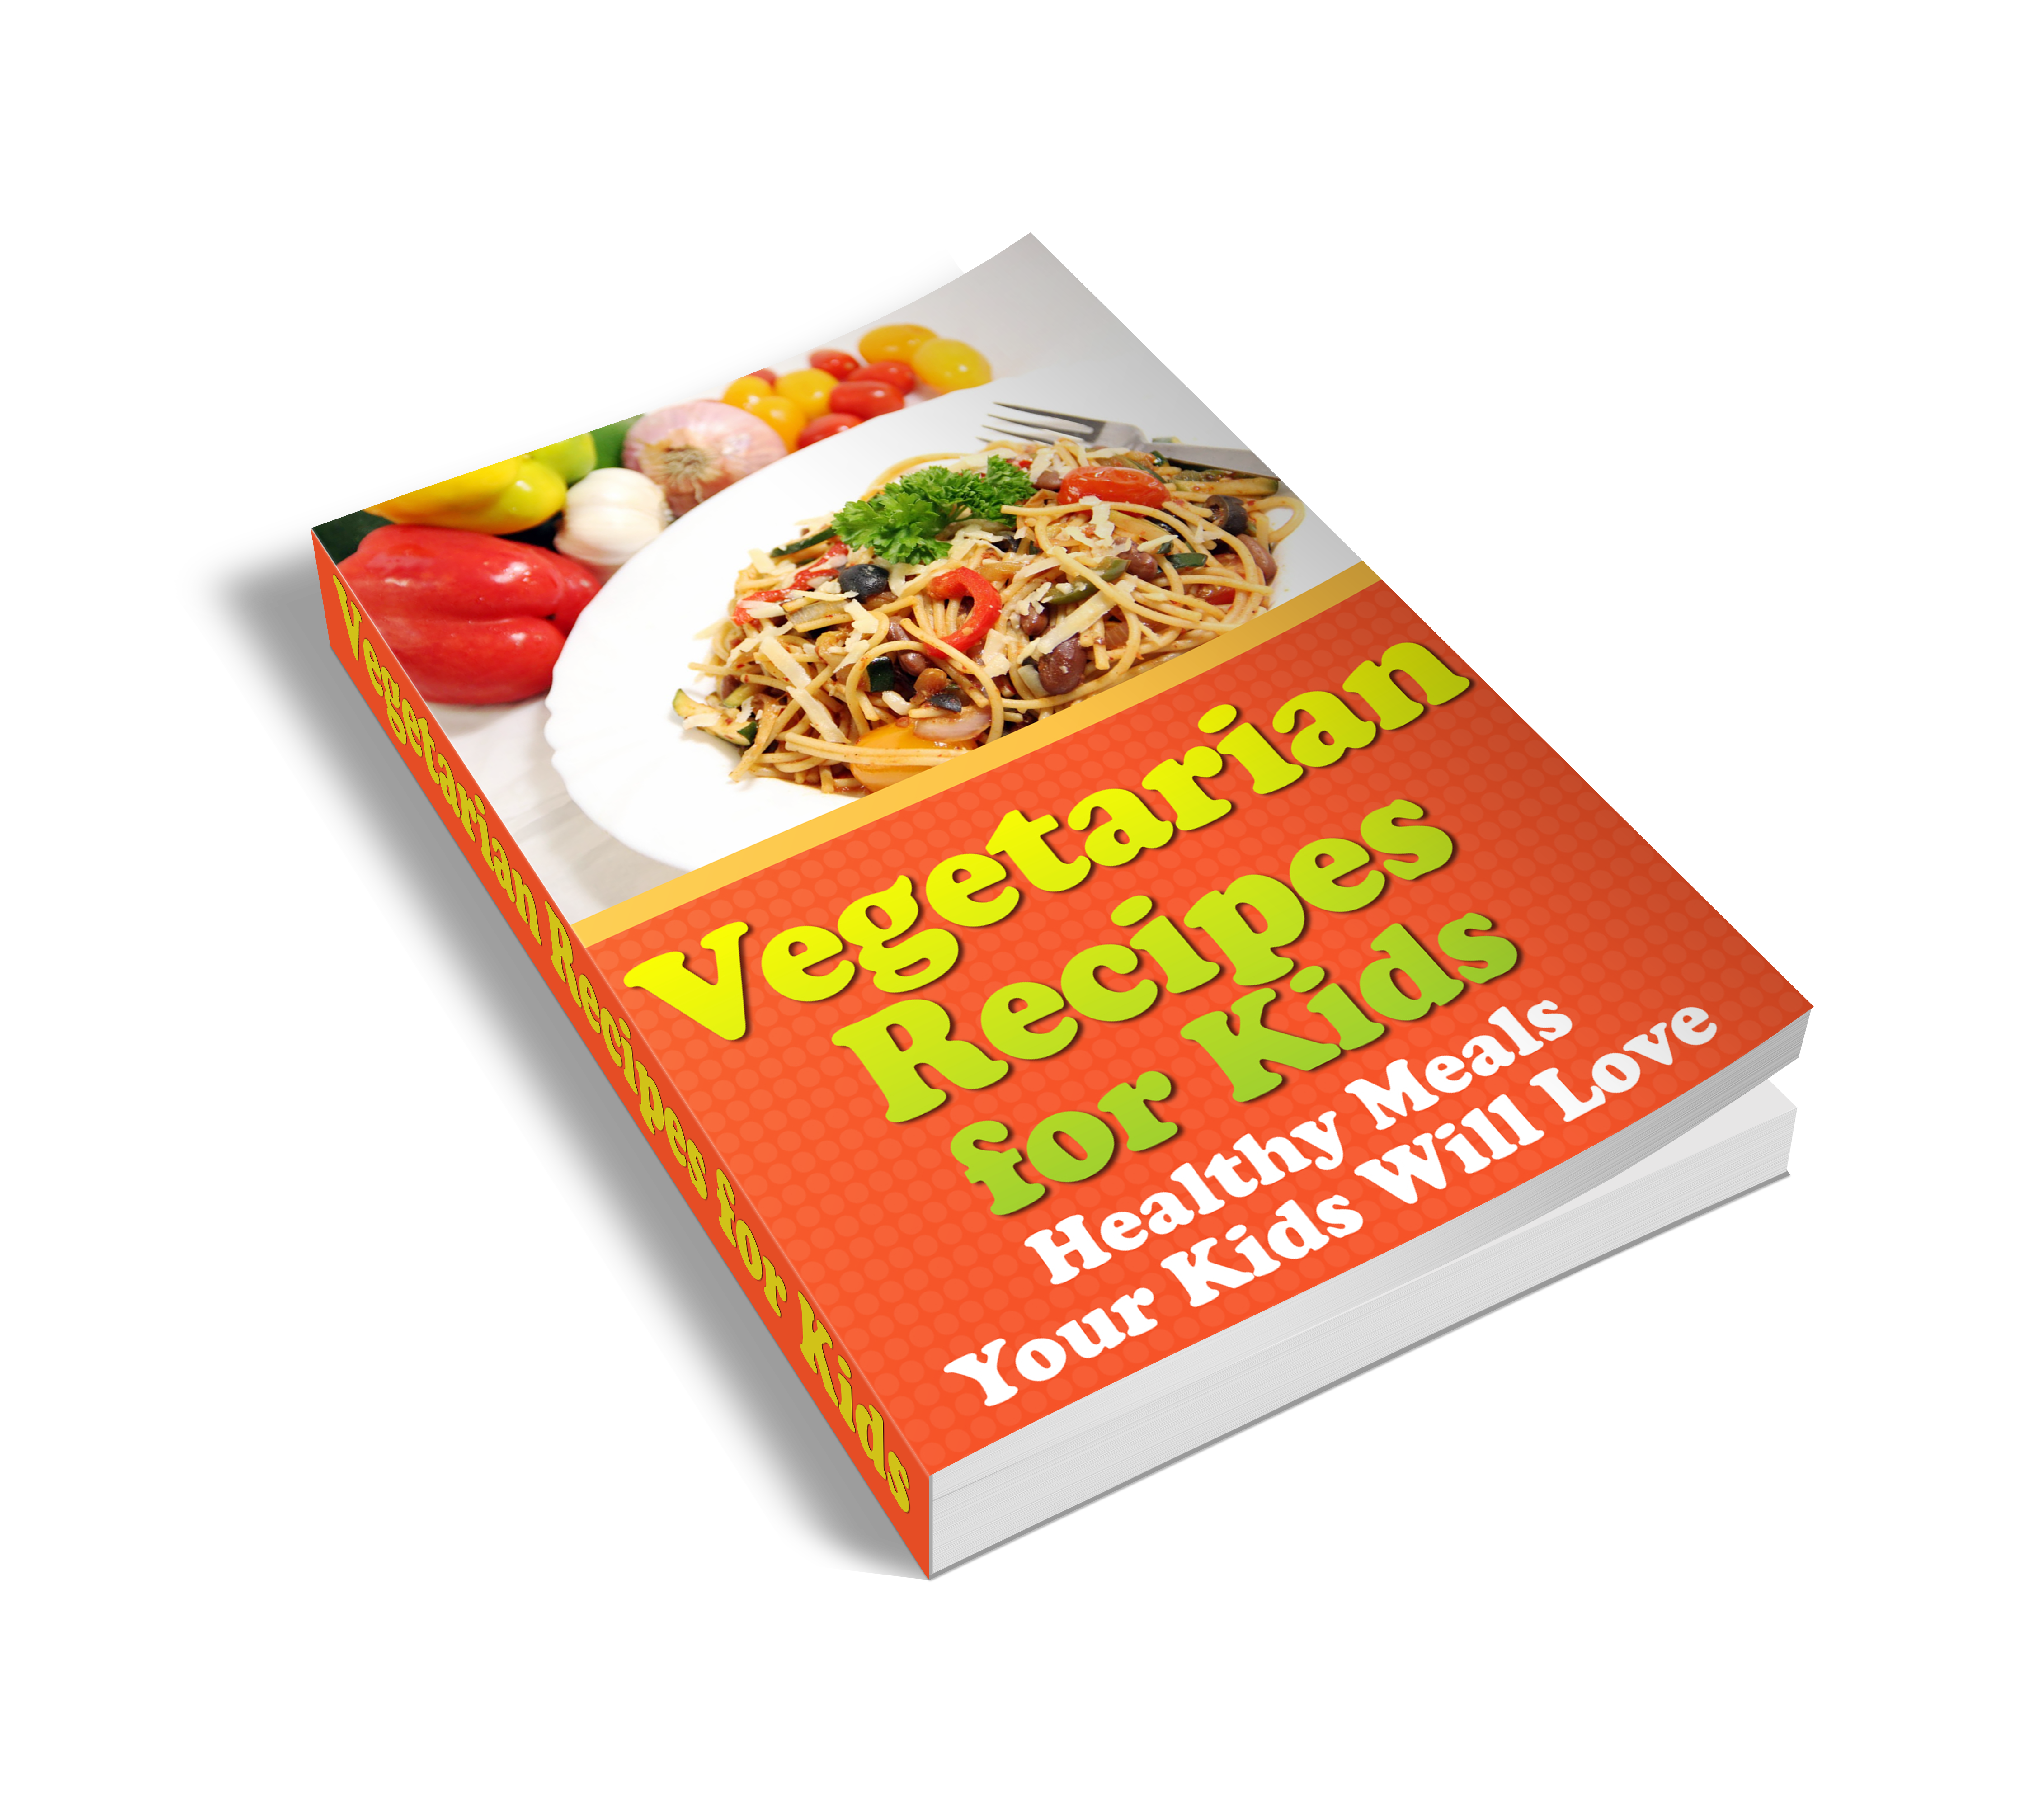 vegetarian recipes for kids cookbook